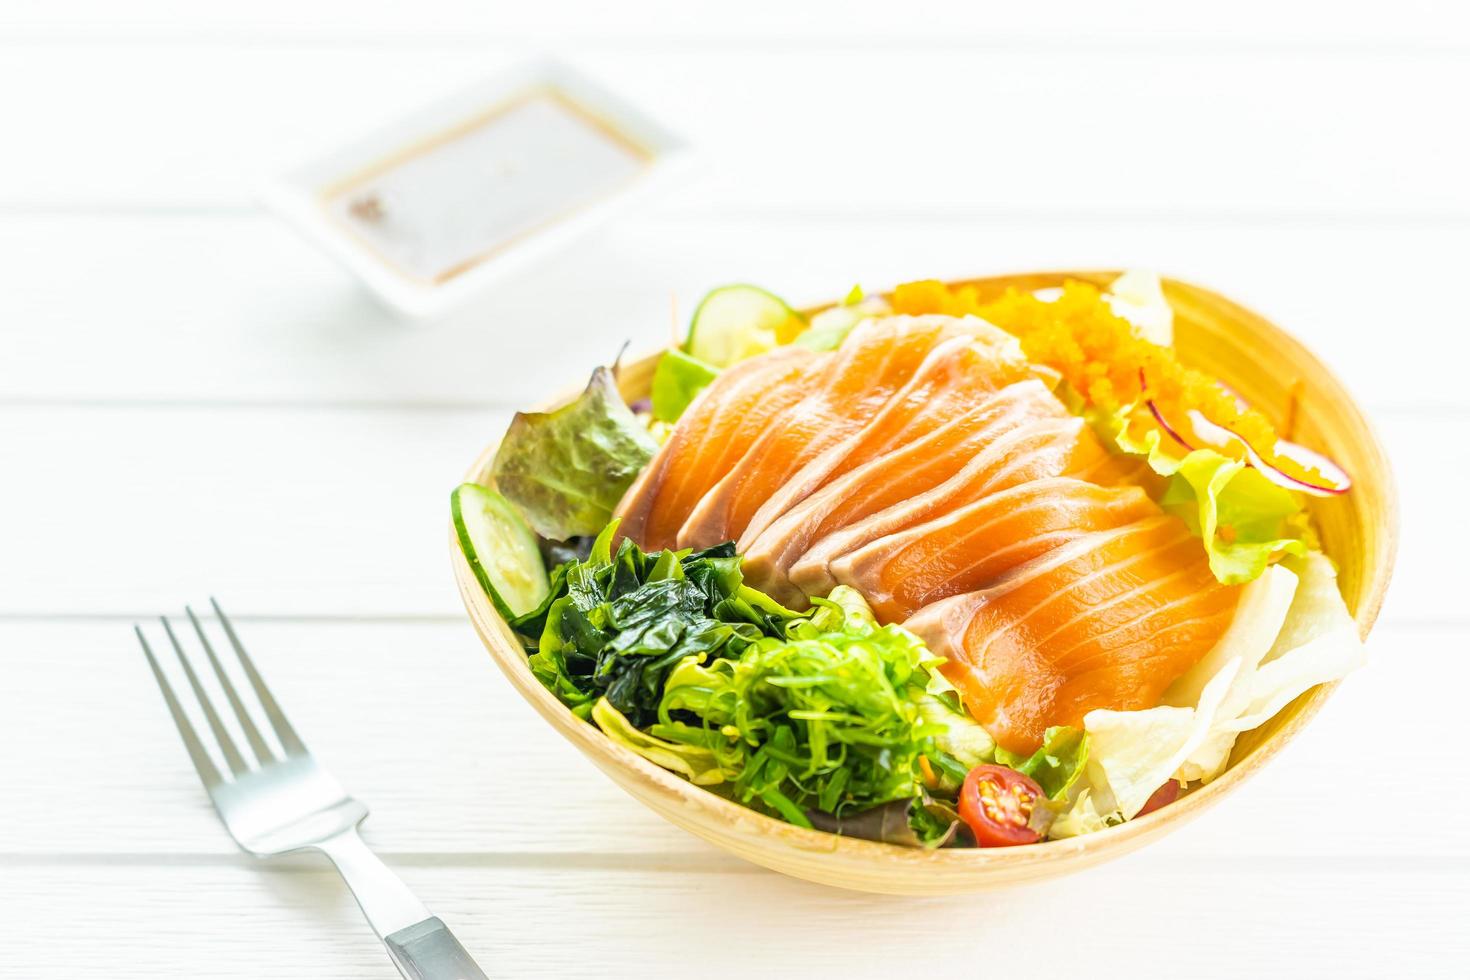 sashimi di carne di pesce salmone crudo fresco con alghe e insalata di altre verdure foto